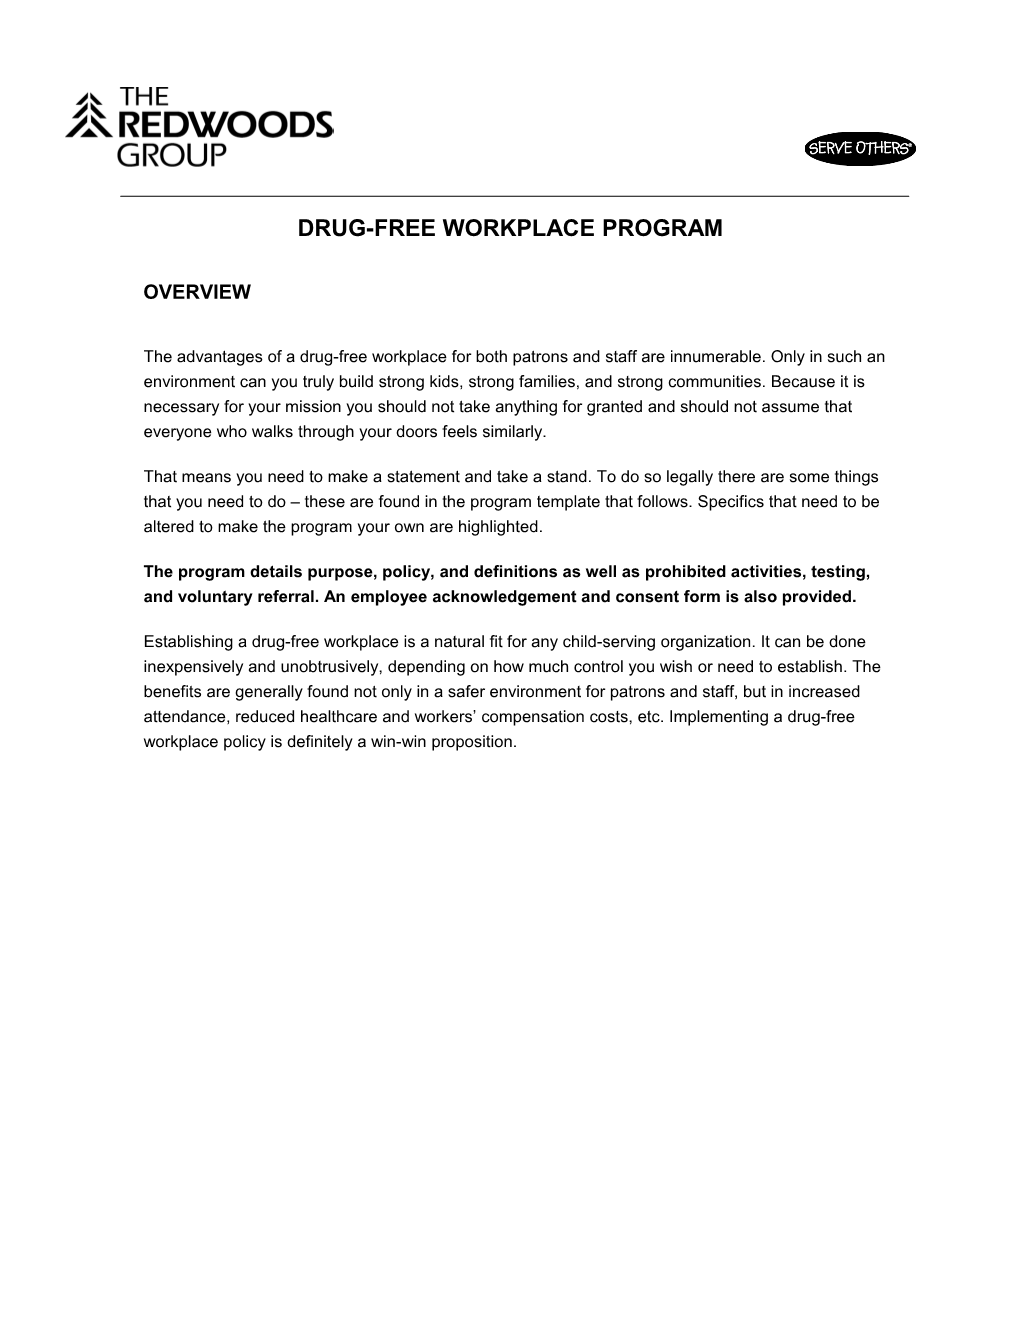 Drug-Free Workplace Program